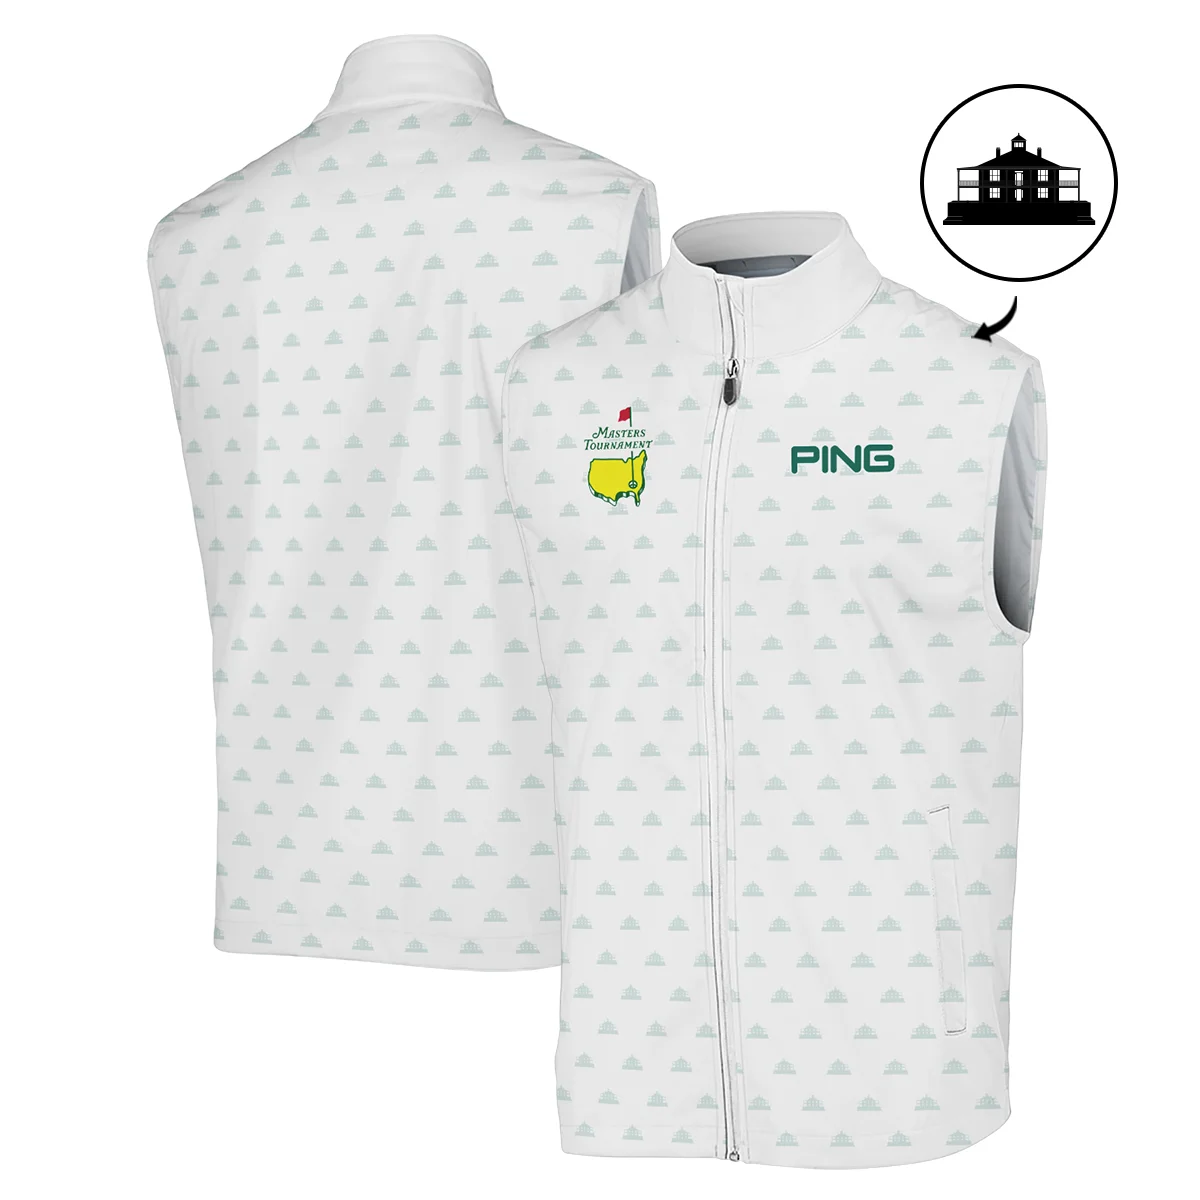 Masters Tournament Golf Sport Ping Quarter-Zip Jacket Sports Cup Pattern White Green Quarter-Zip Jacket